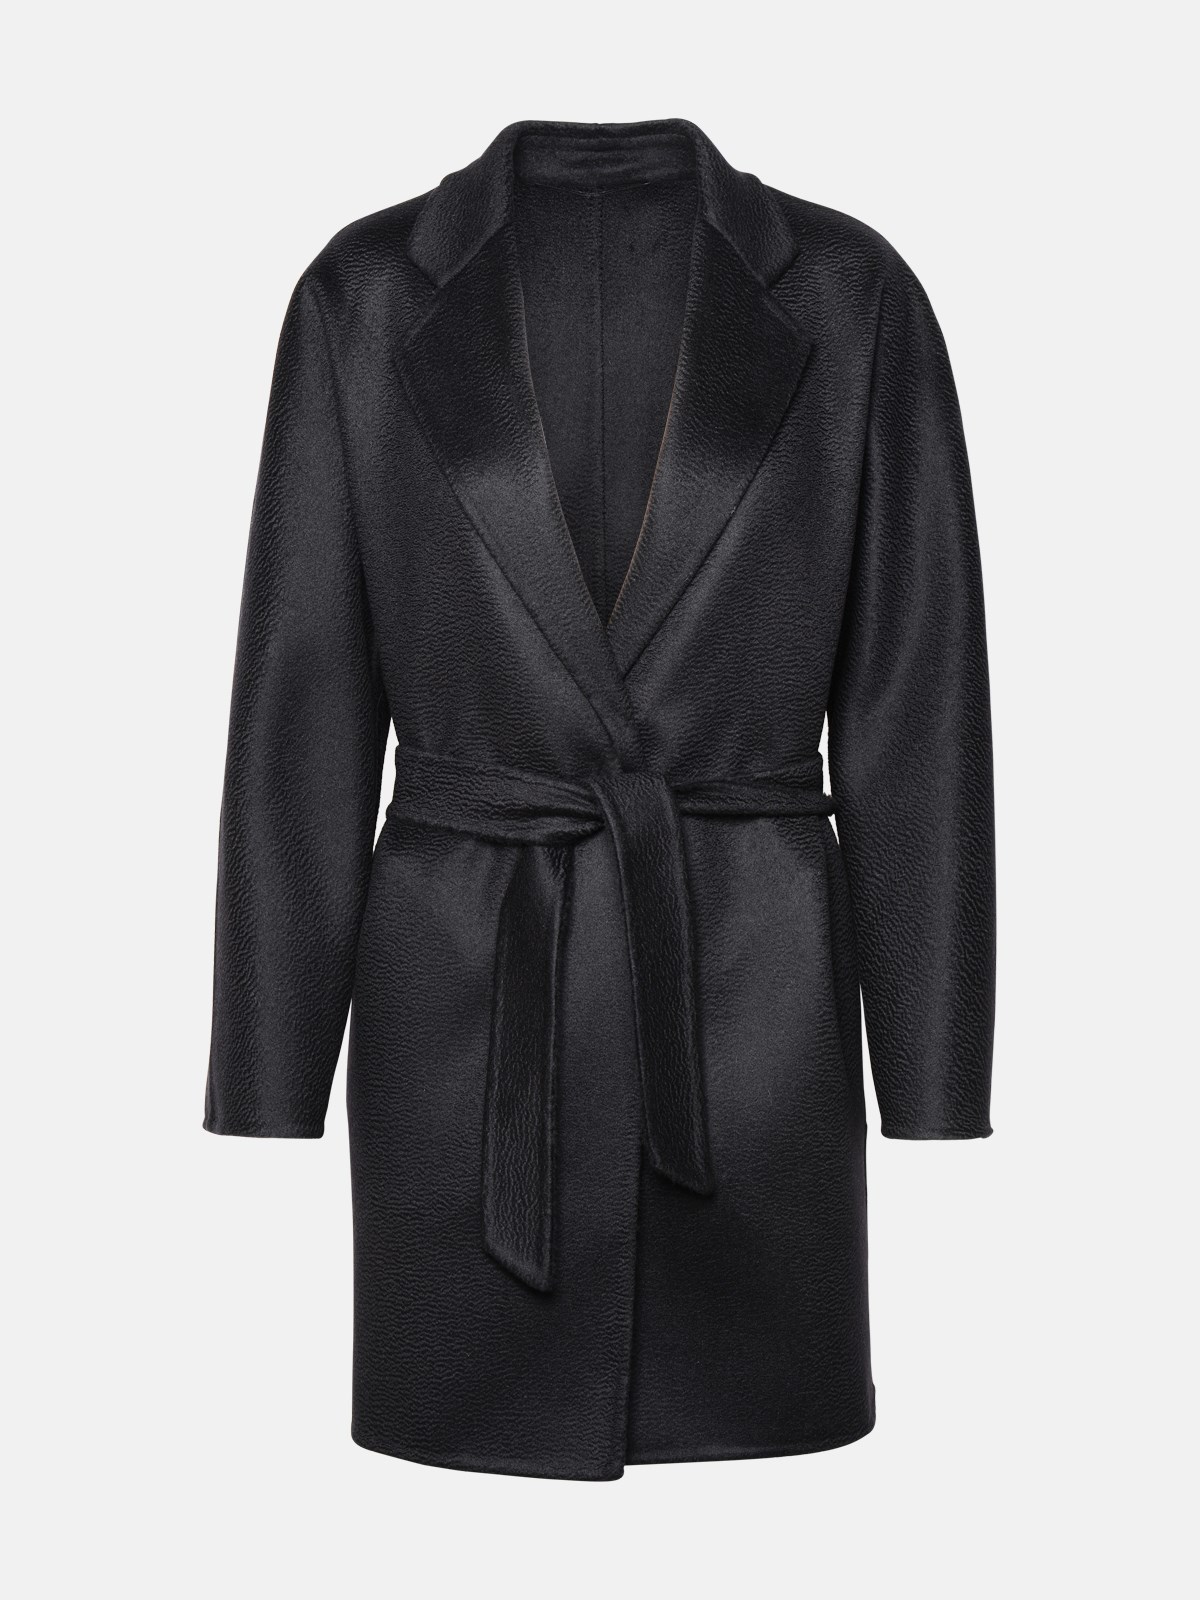 Max Mara Black Cashmere Coat